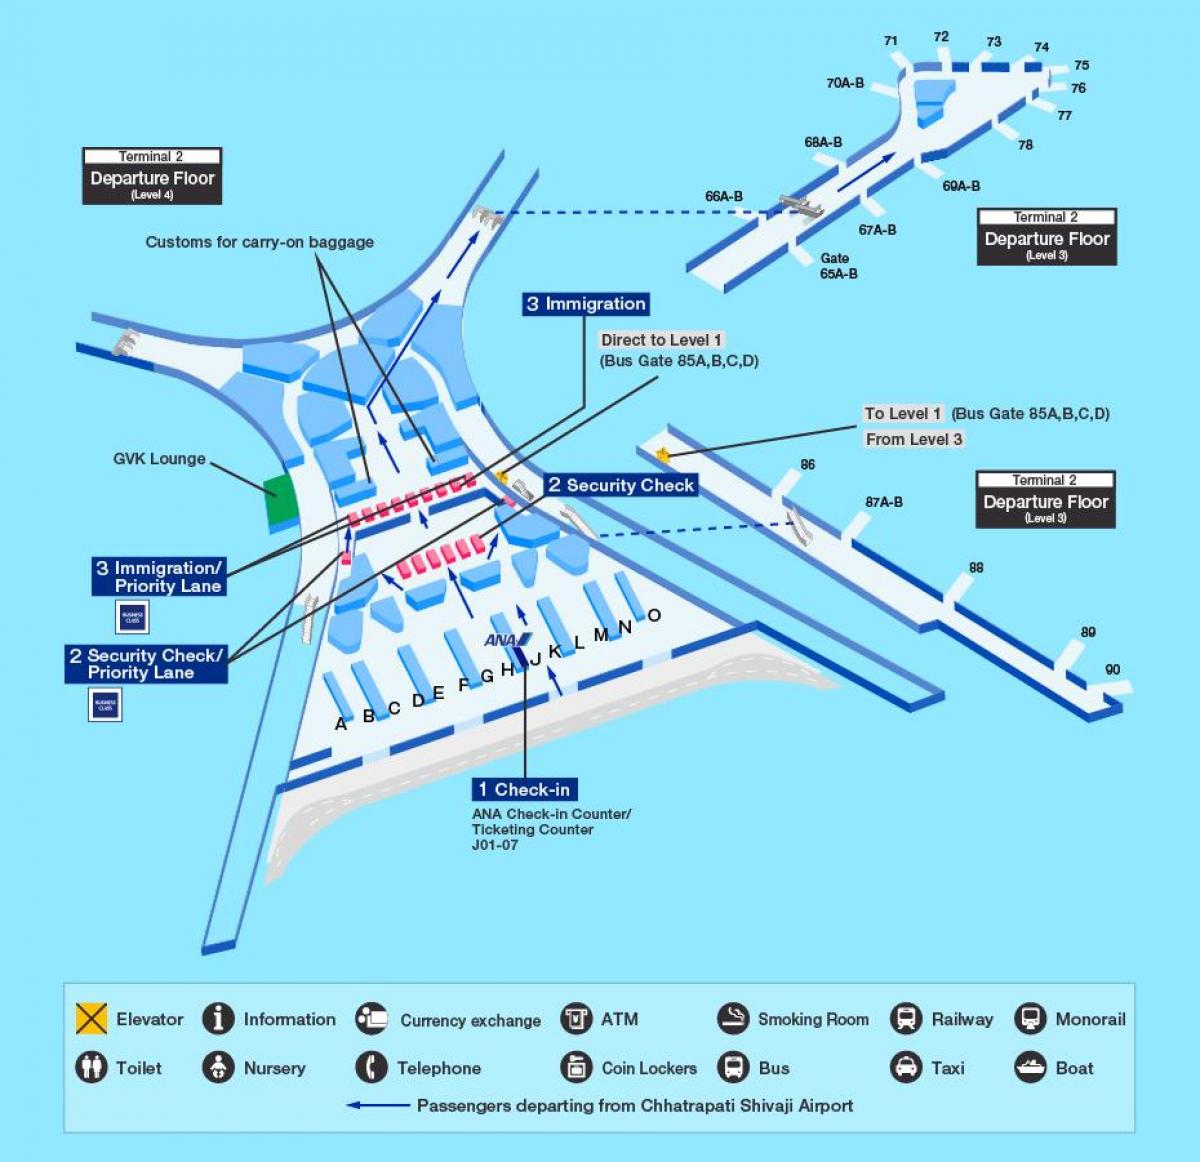 Mumbai international airport terminal 2 på karta